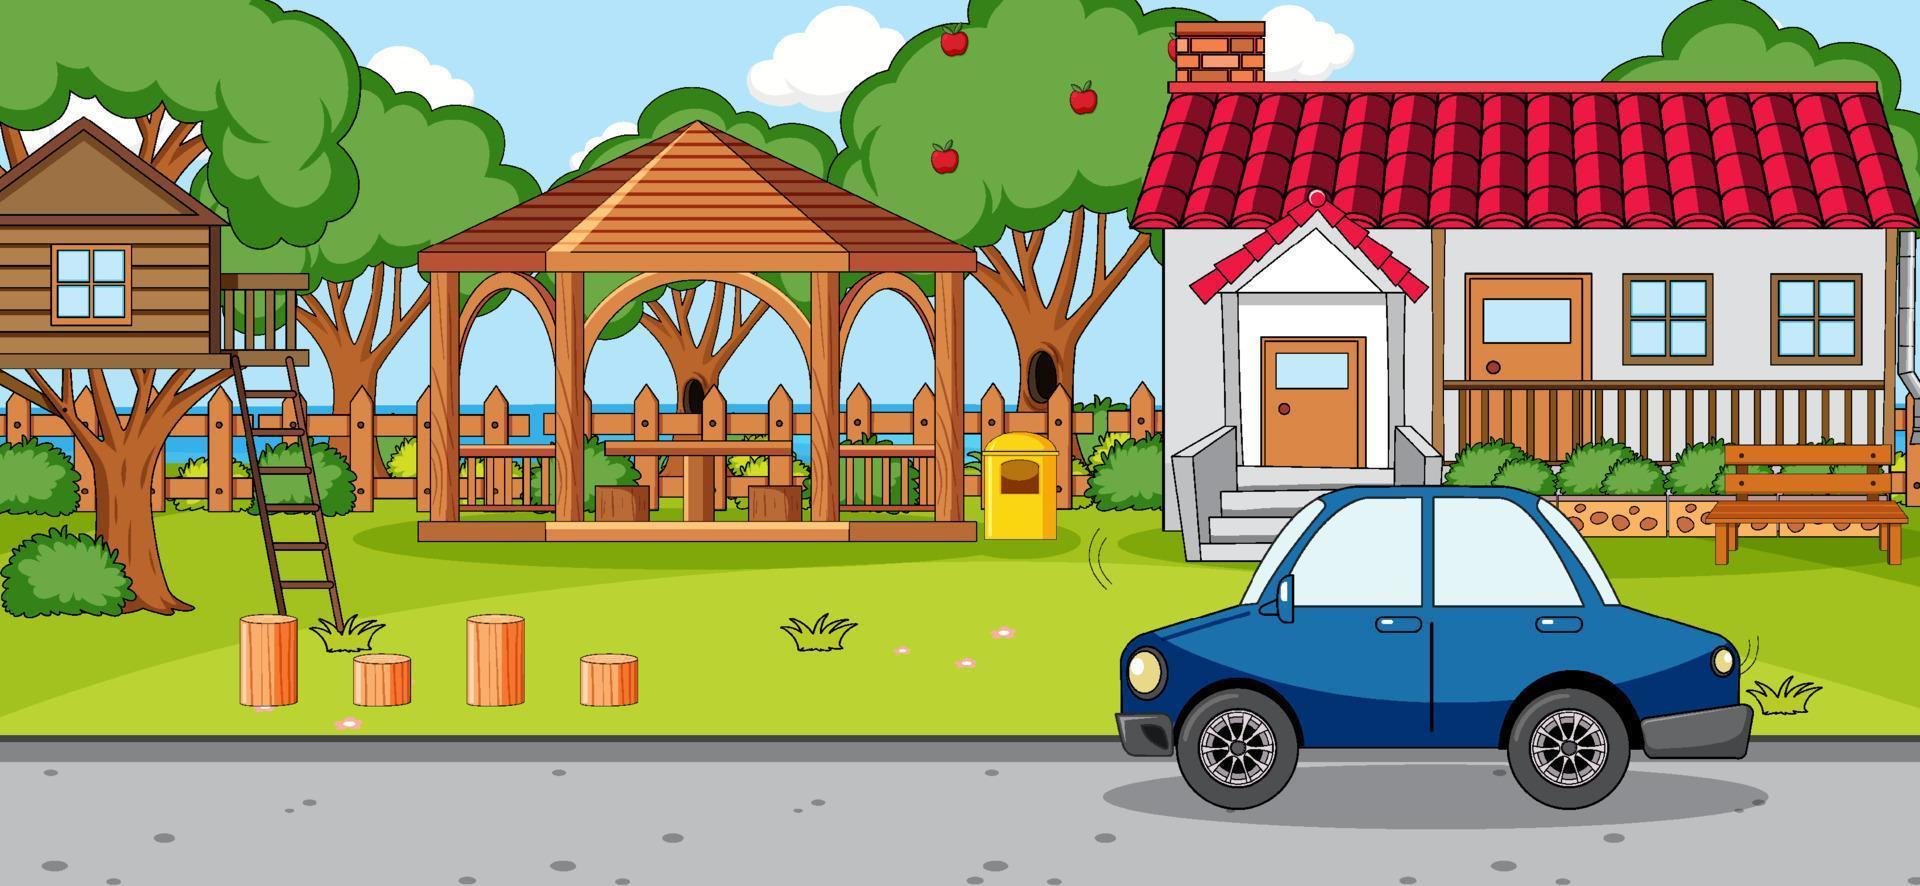 Outdoor scene with doodle house cartoon vector